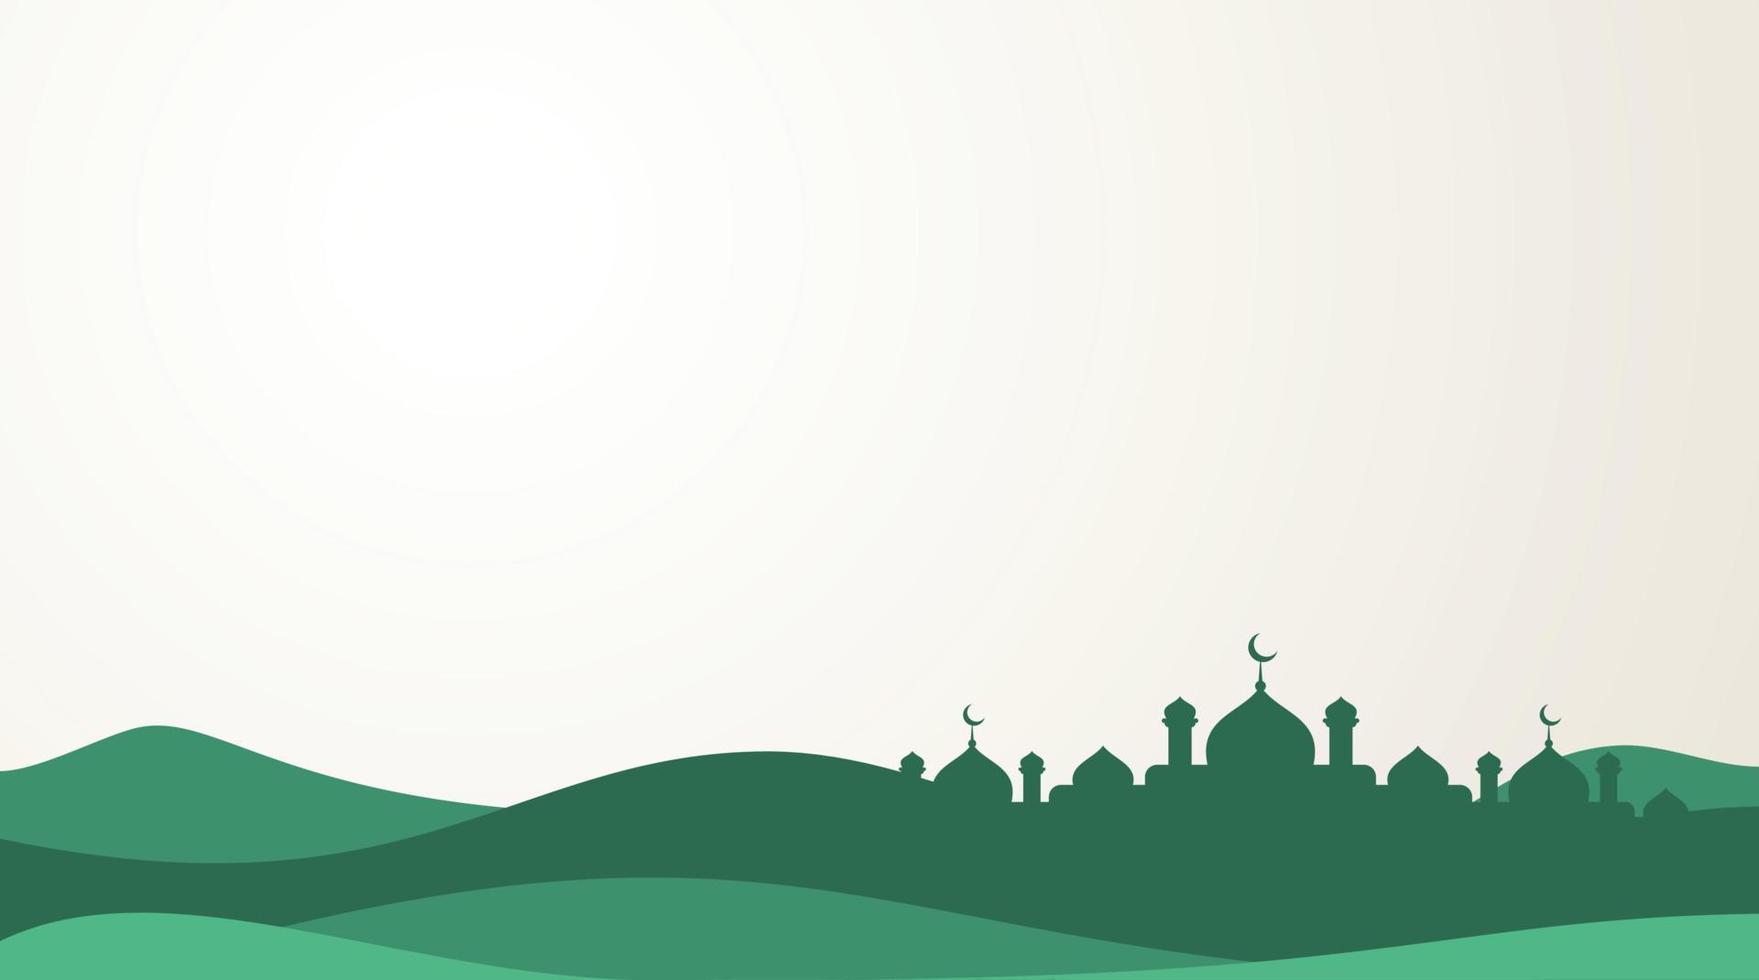 arrière-plan islamique. fond eid mubarak. fond de ramadan kareem. vecteur